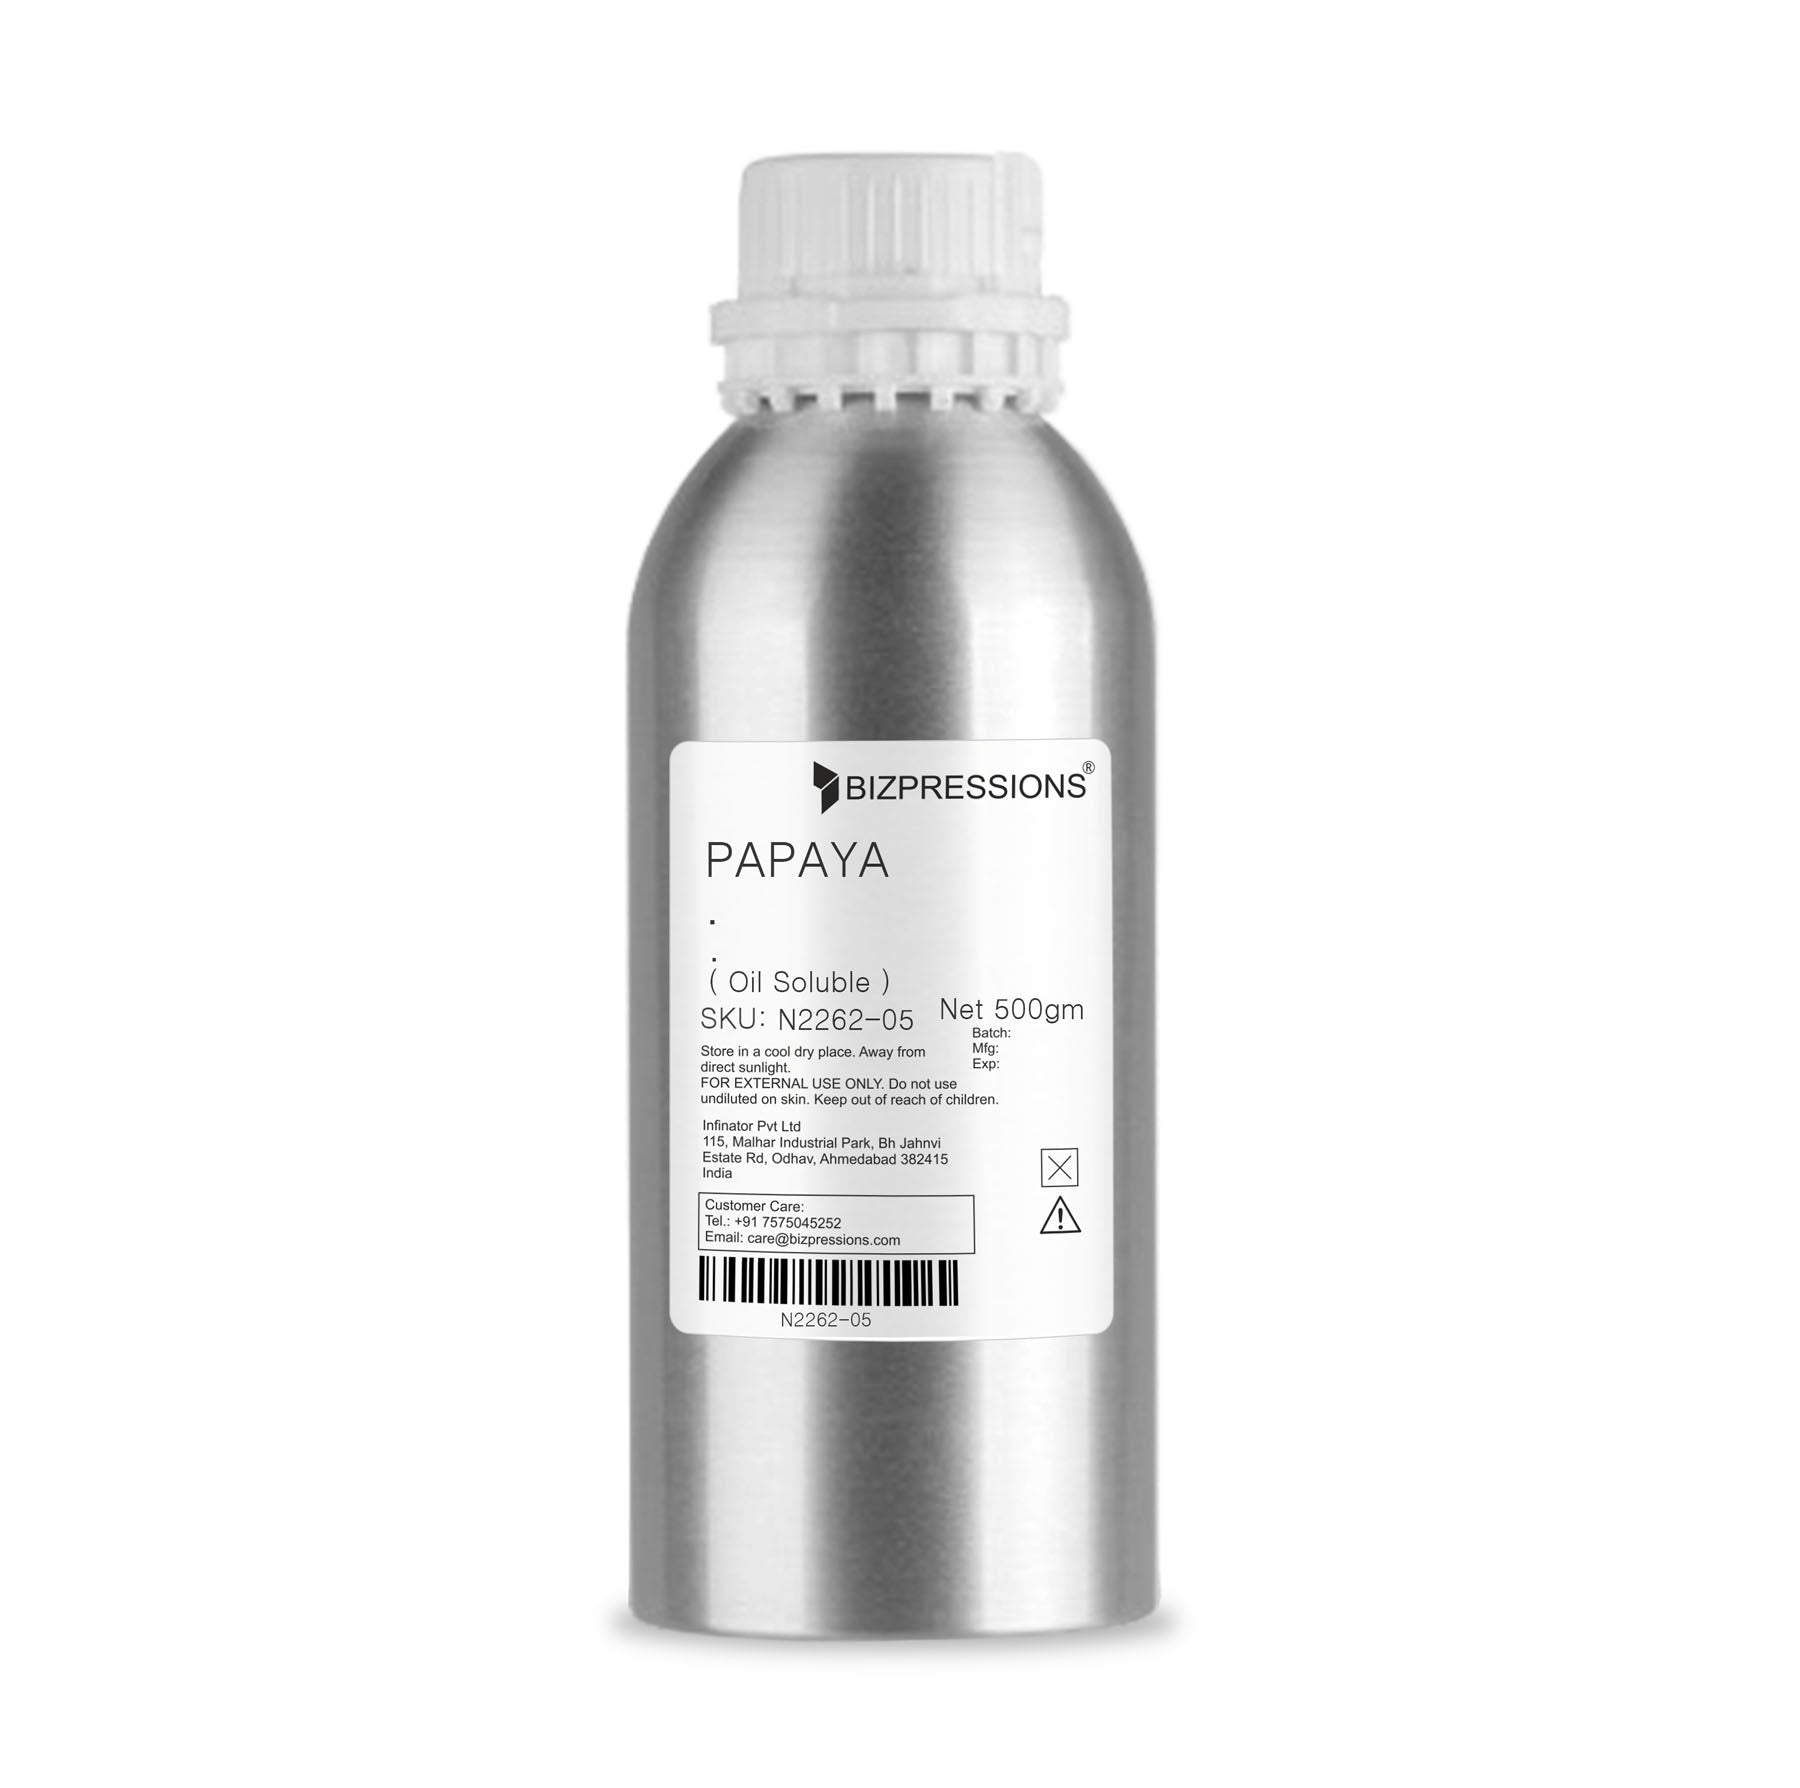 PAPAYA - Fragrance ( Oil Soluble ) - 500 gm